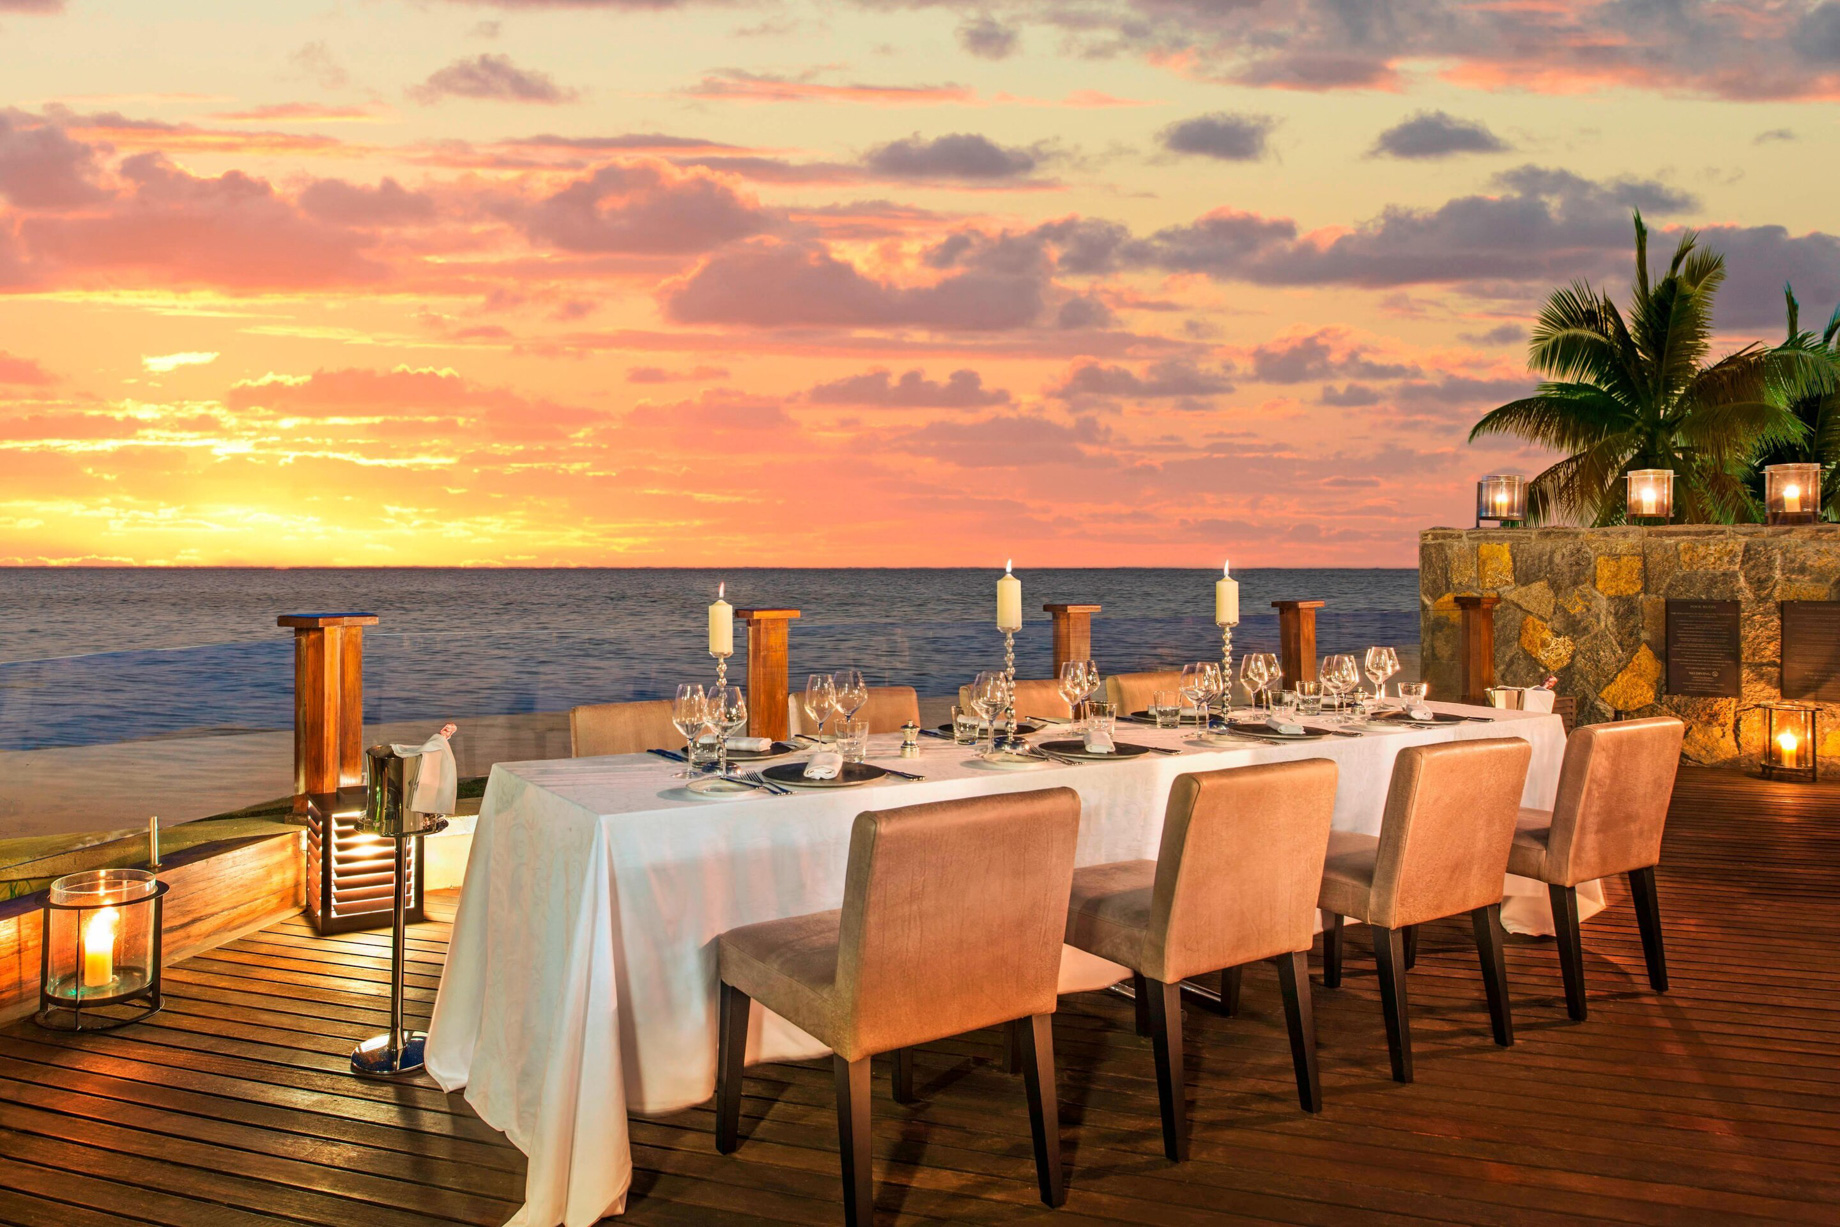 JW Marriott Mauritius Resort – Mauritius – Night Dining on the Terrace